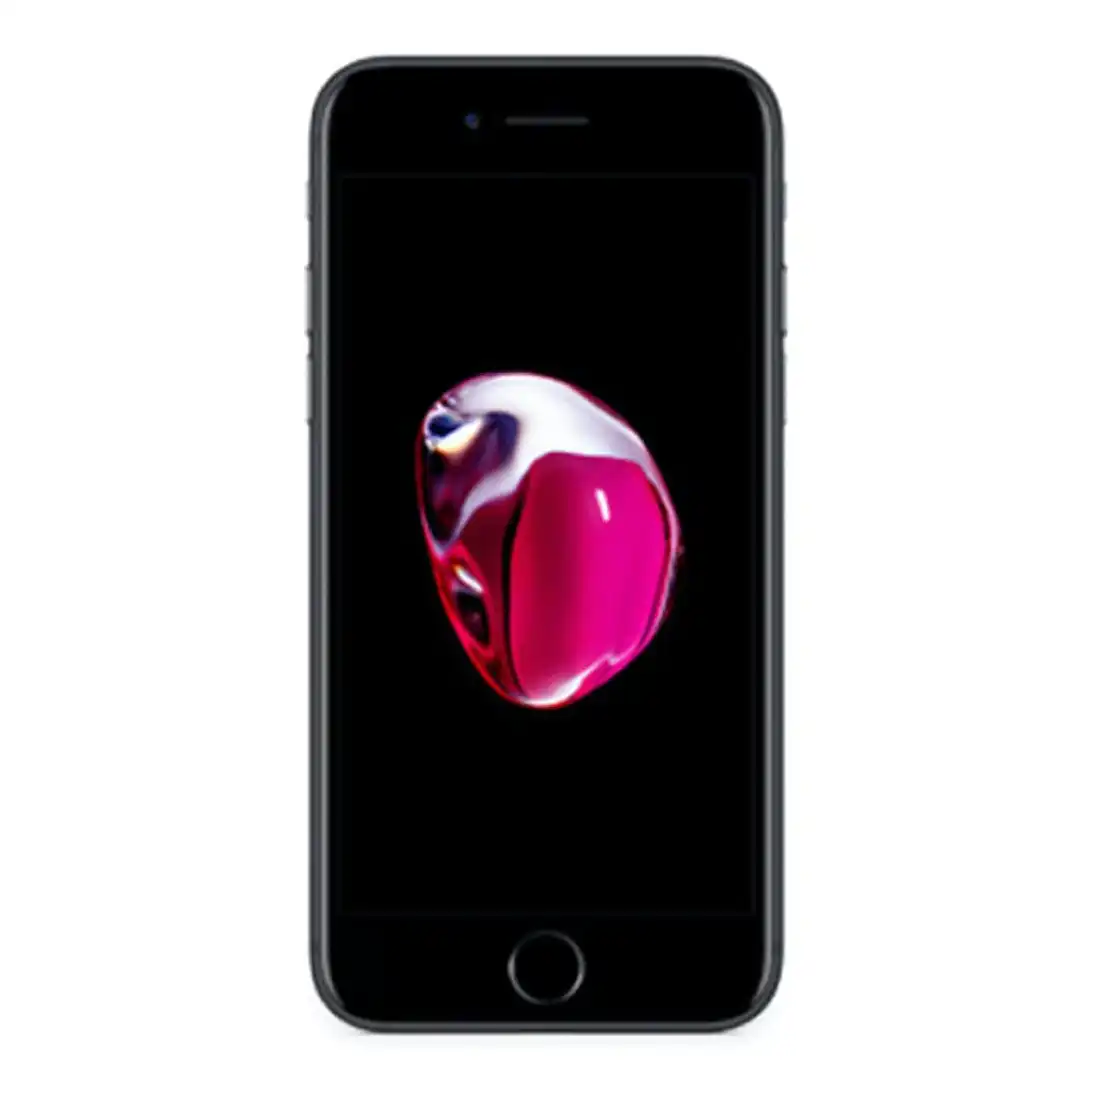 Apple iPhone 7 32GB Black [Refurbished] - Good